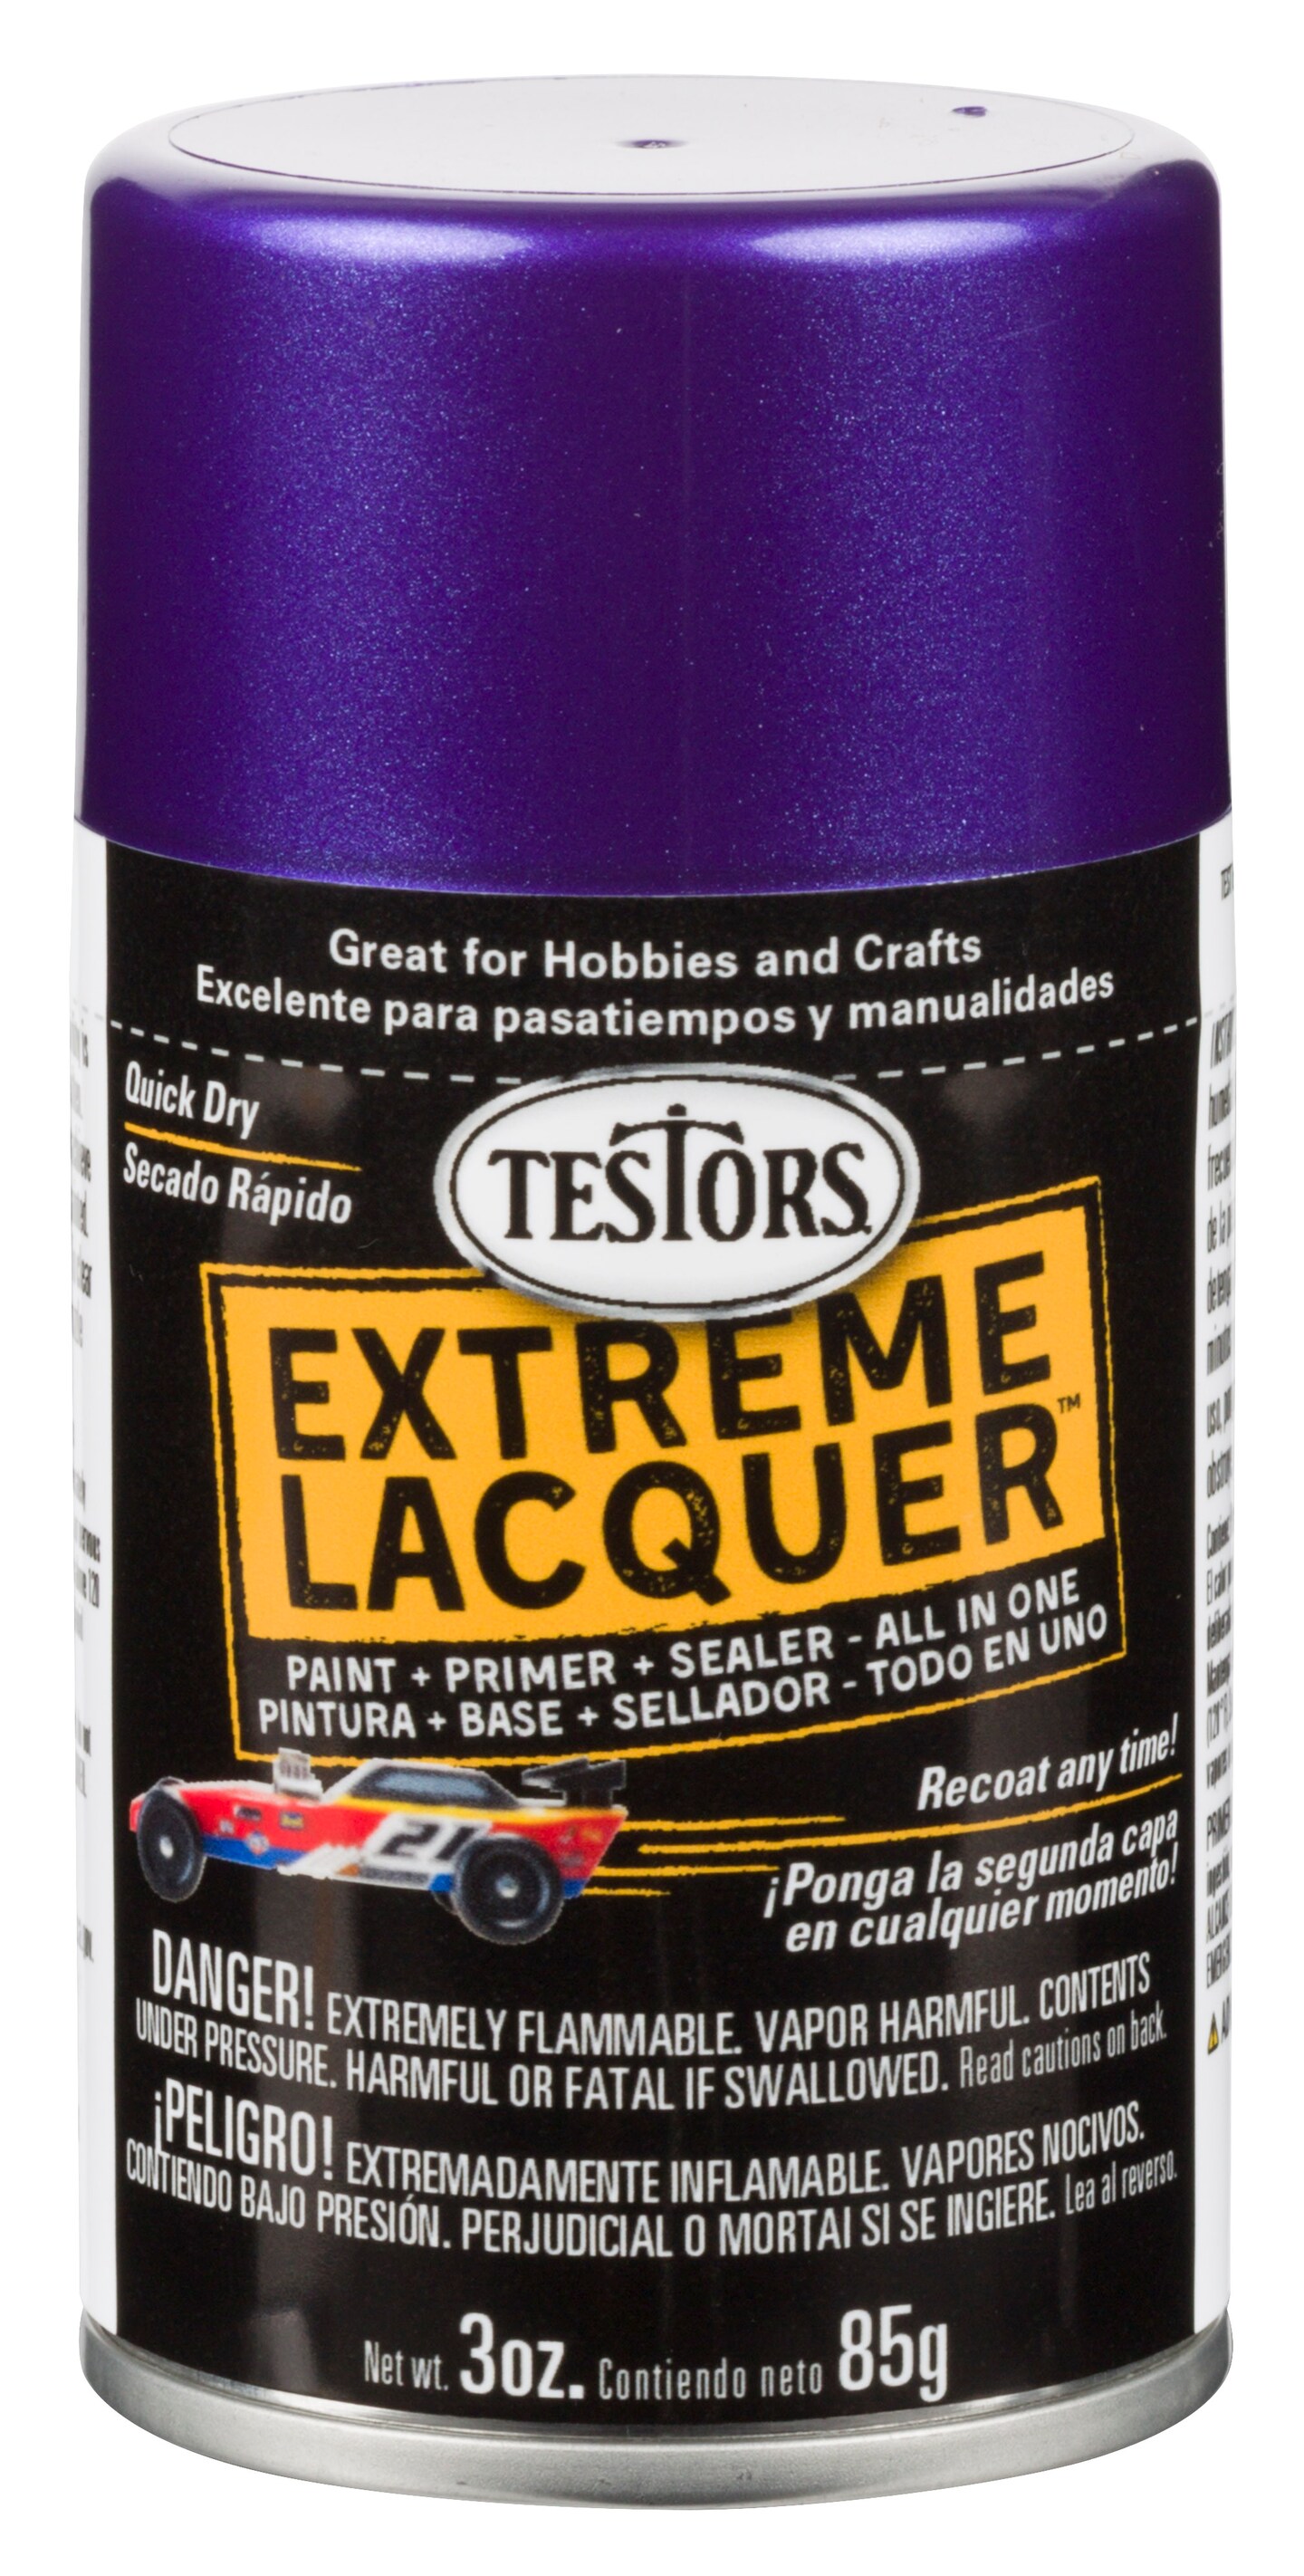 Testors One Coat Lacquer Paint, 3 oz. Spray Can, Purple Licious